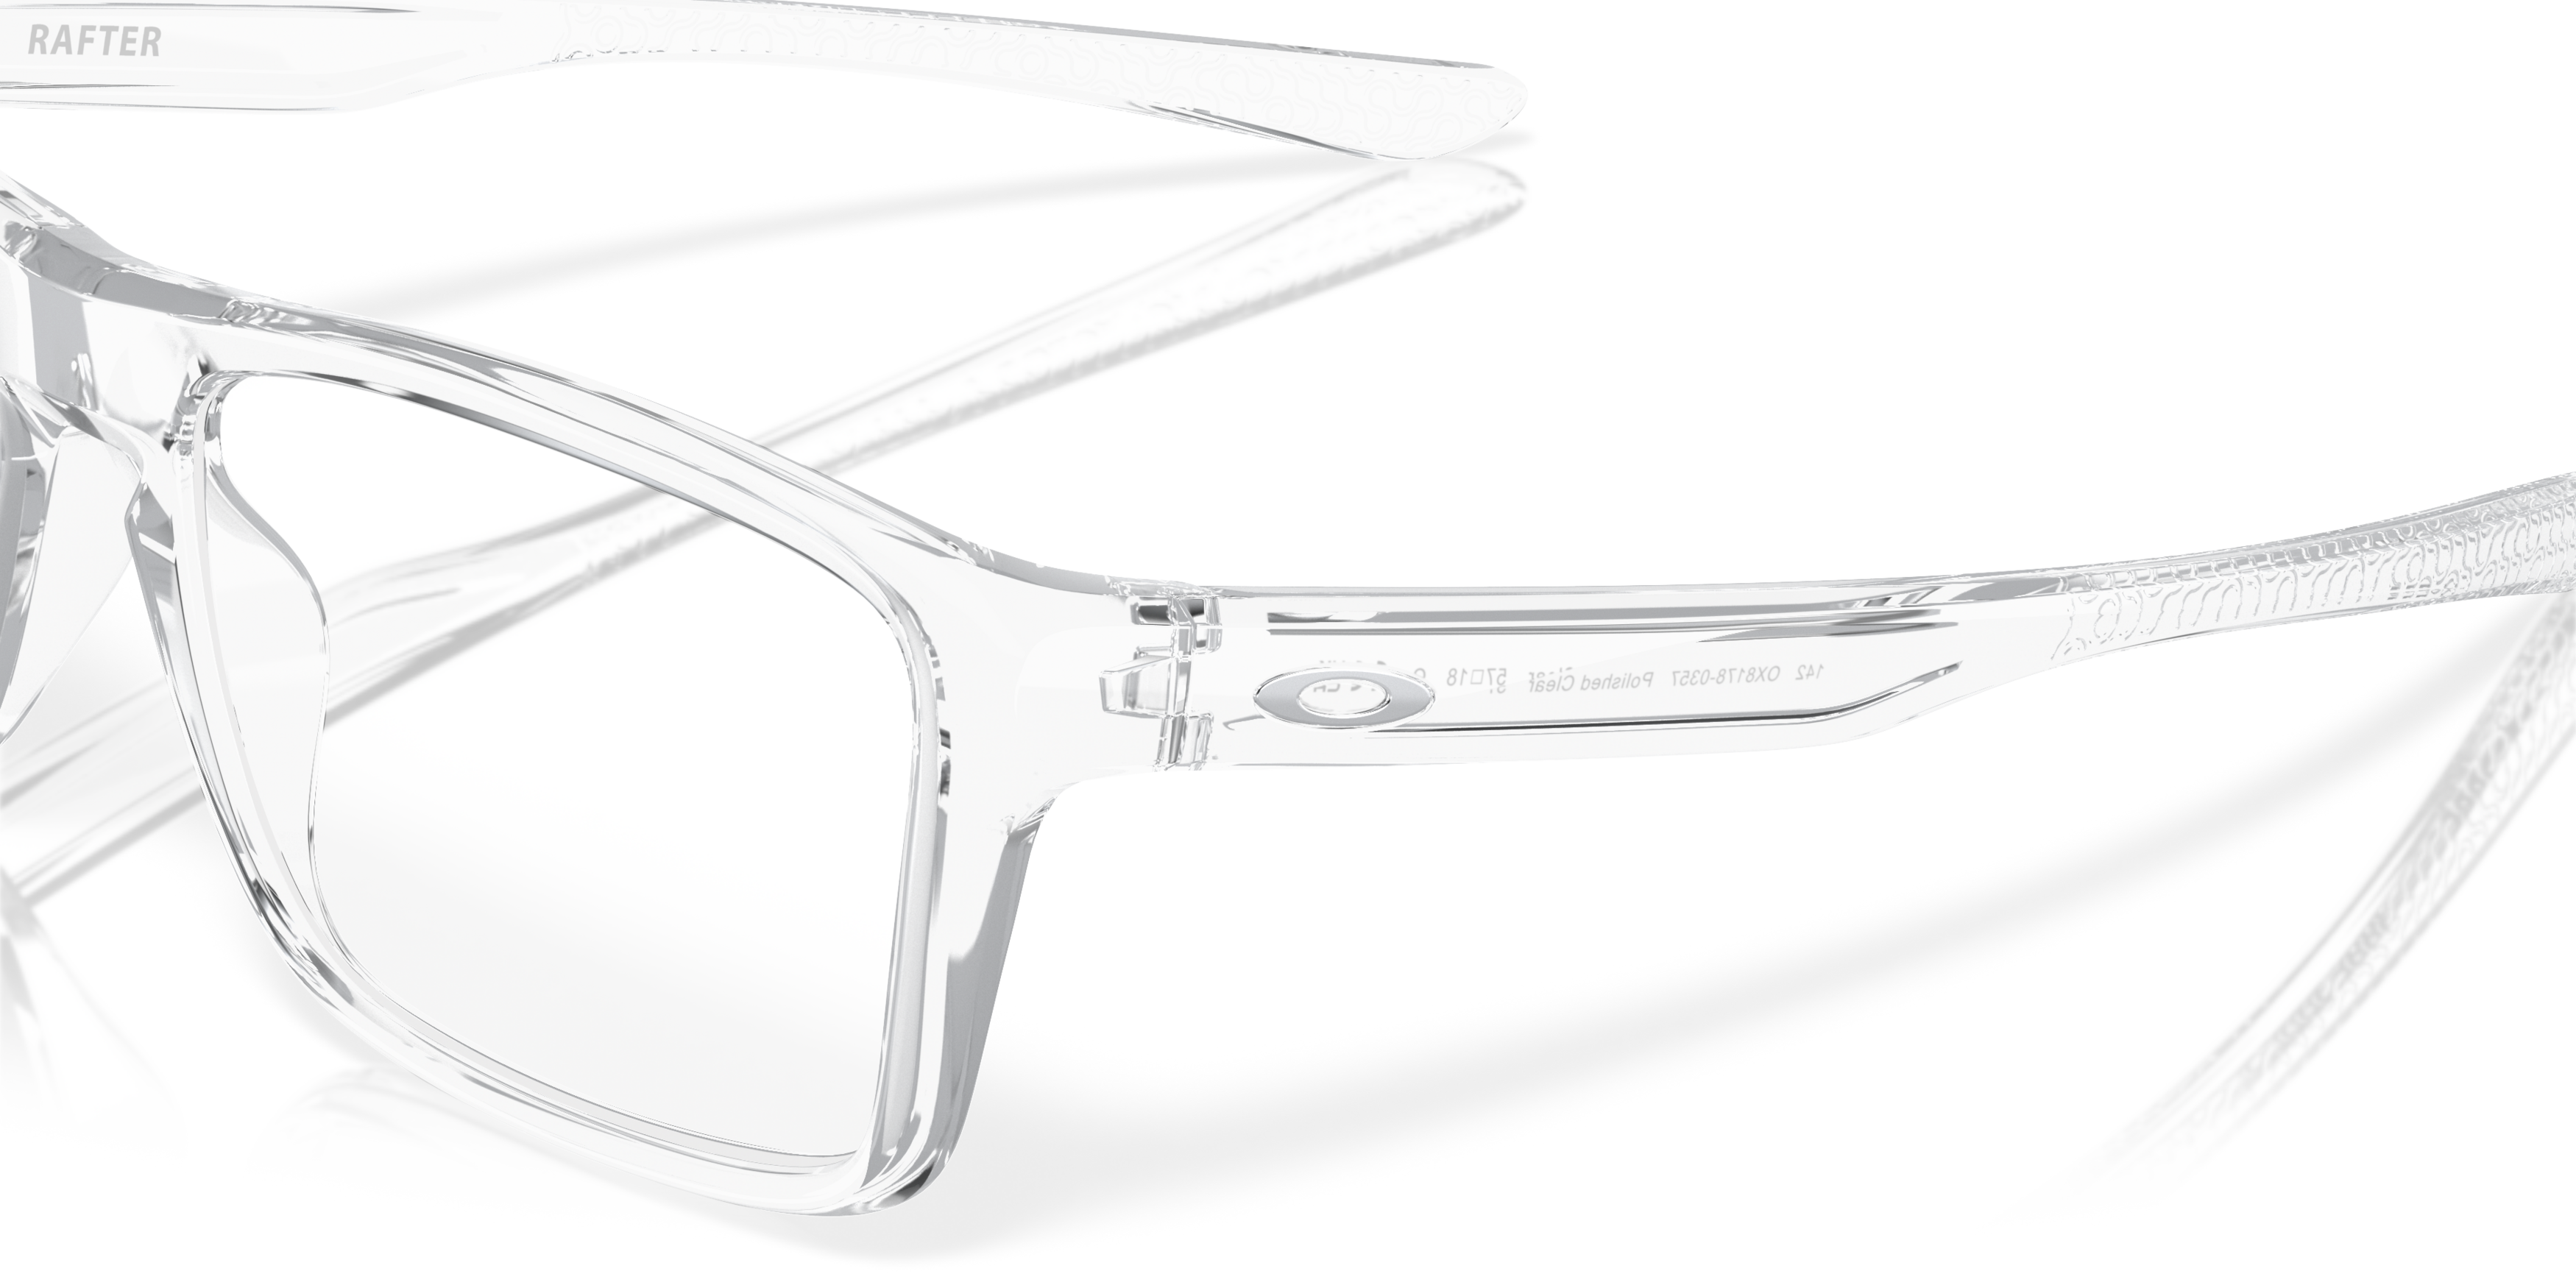 Detail01 Oakley Rafter OX 8178 Glasses Transparent / Transparent, Clear